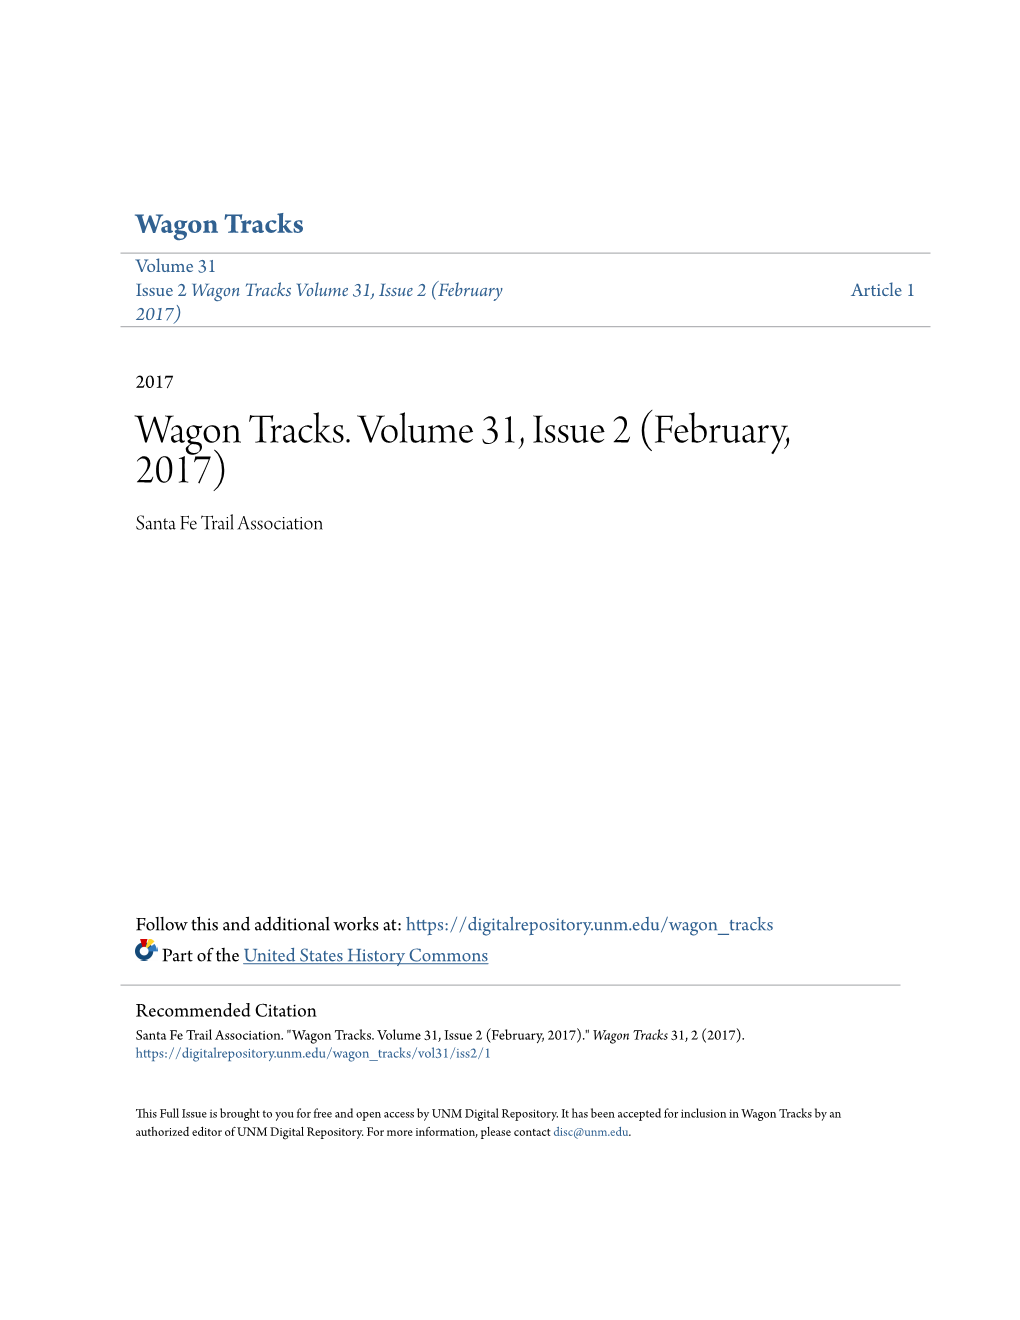 Wagon Tracks. Volume 31, Issue 2 (February, 2017) Santa Fe Trail Association